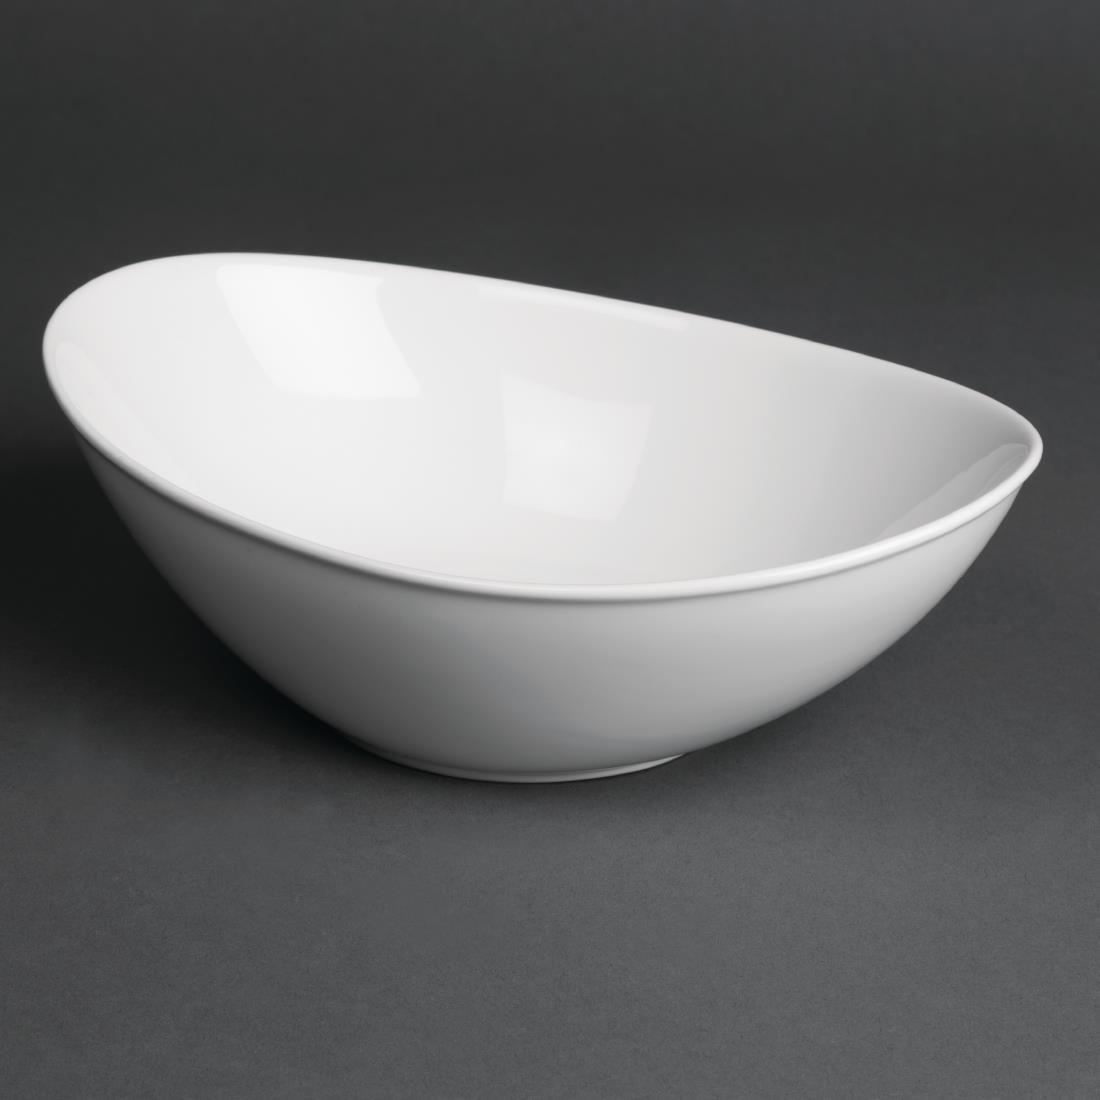 Royal Porcelain Classic White Salad Bowls 200mm (Pack of 6) - CG060  - 1